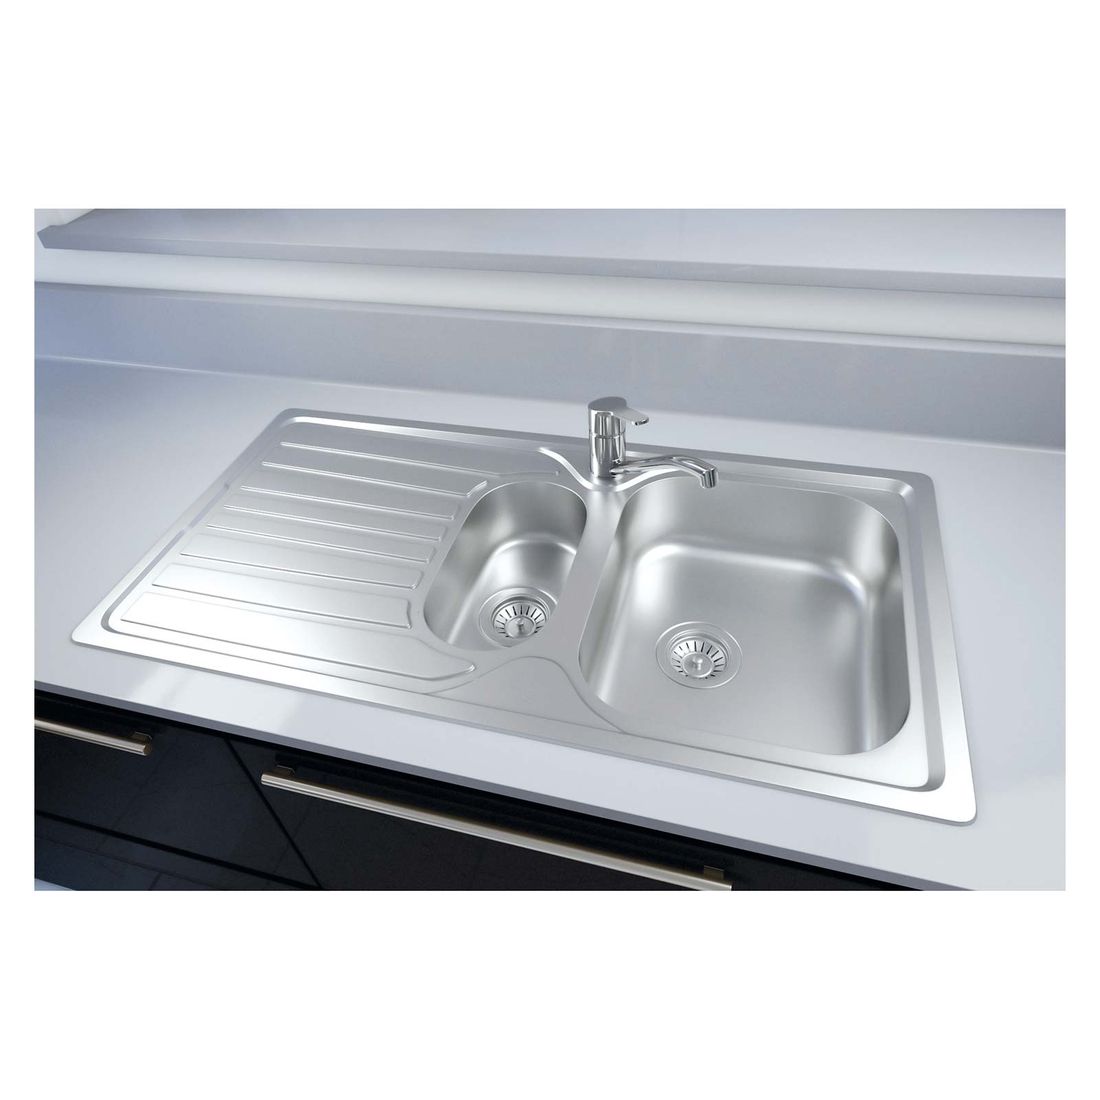 Reginox Monte Carlo 1.5 Sink And Tap 965 X 500 Stainless Steel